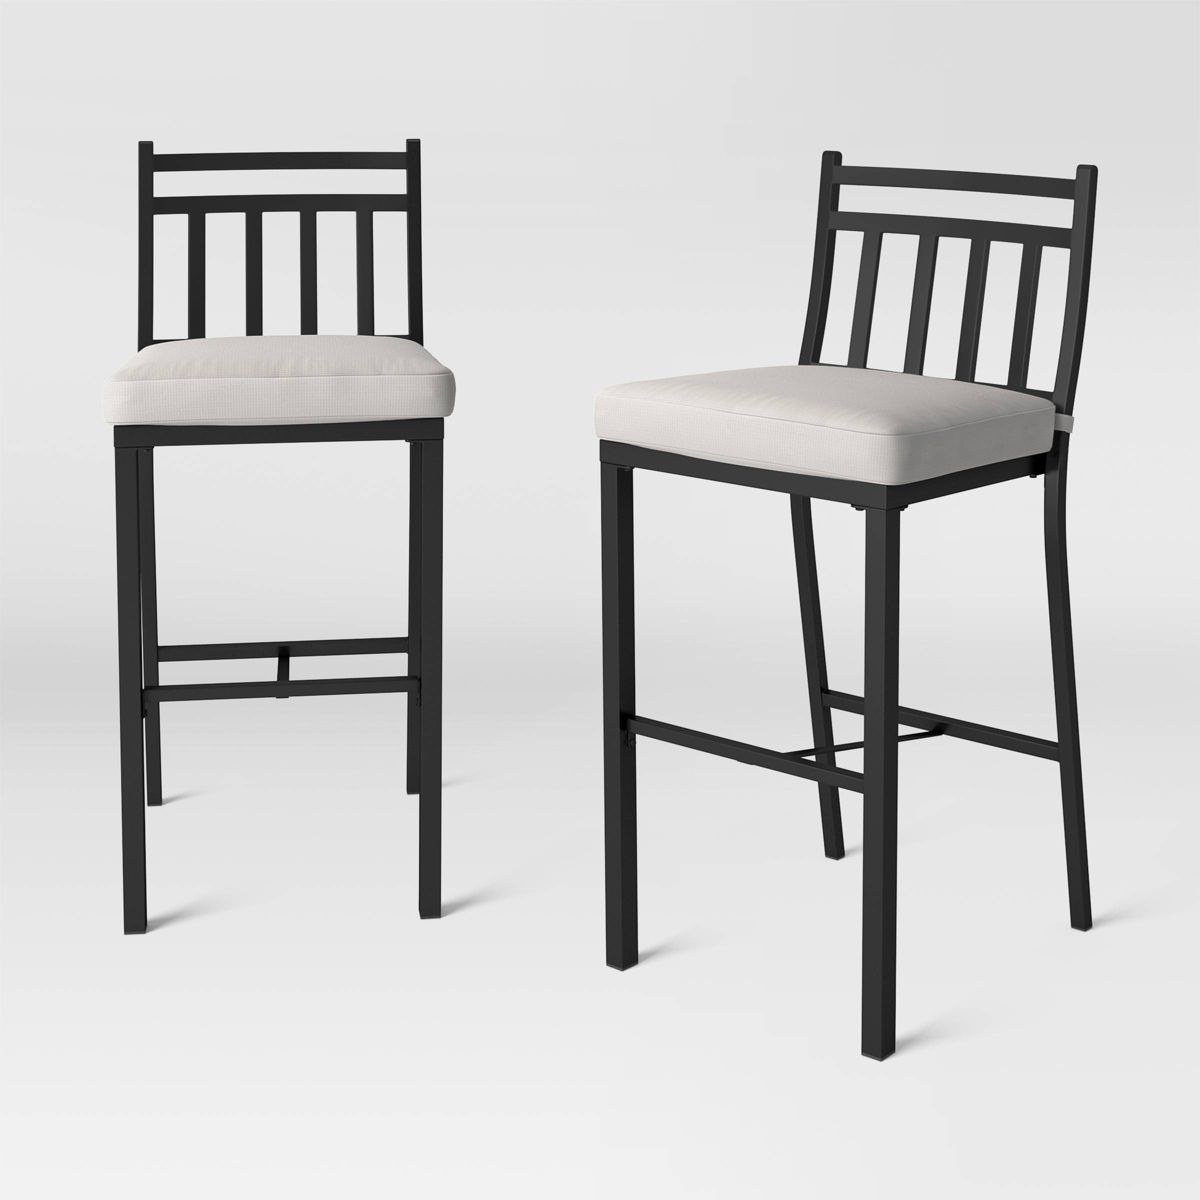 Fairmont 2pk Bar Height Patio Chairs - Black - Threshold™ | Target